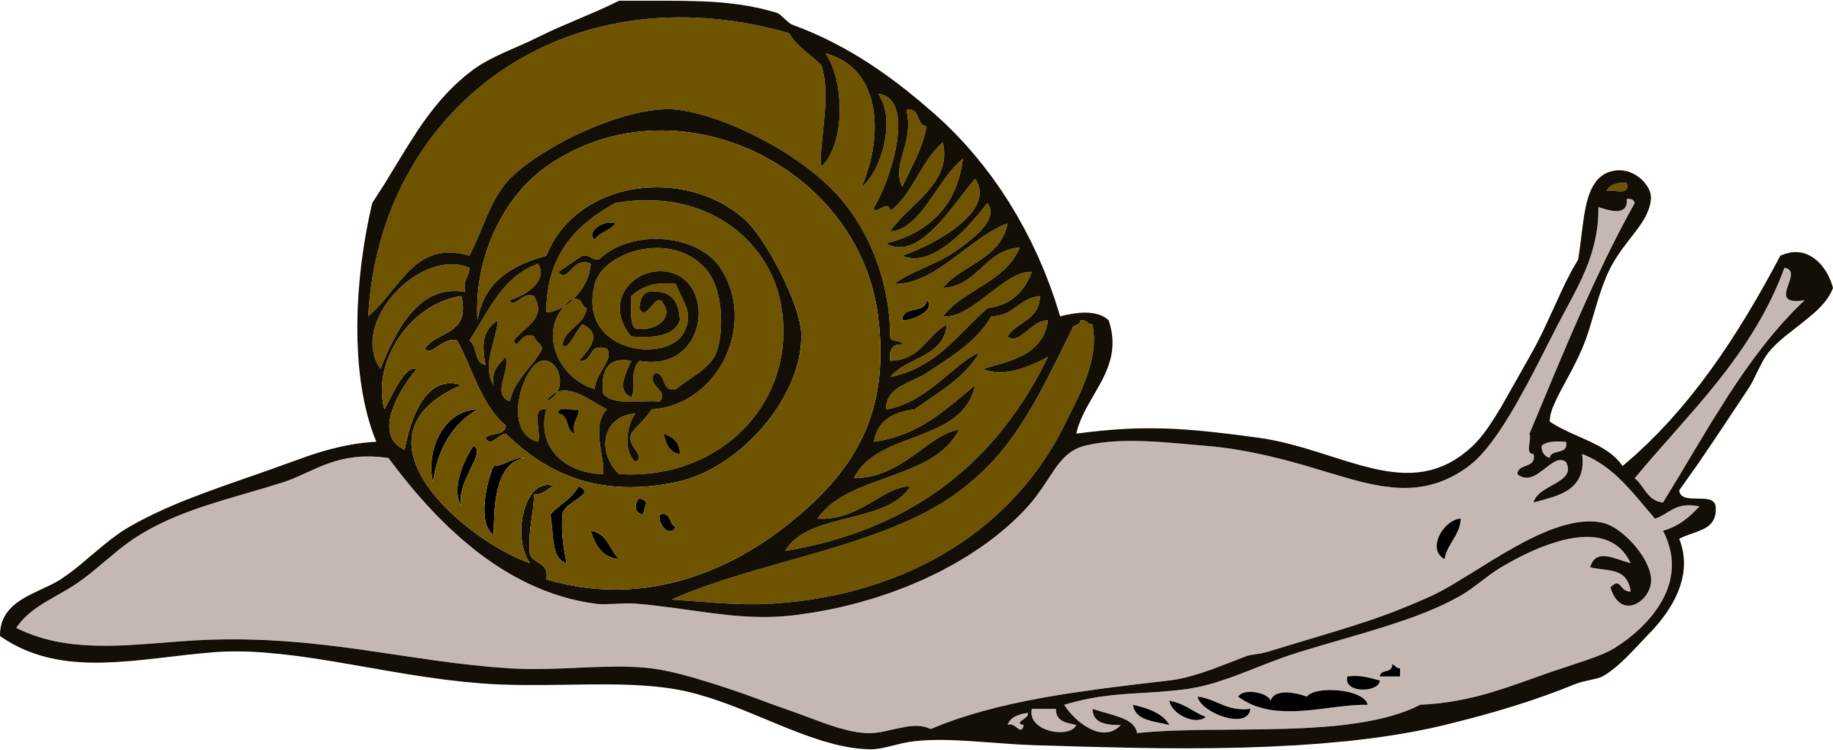 Snail,Food,Invertebrate